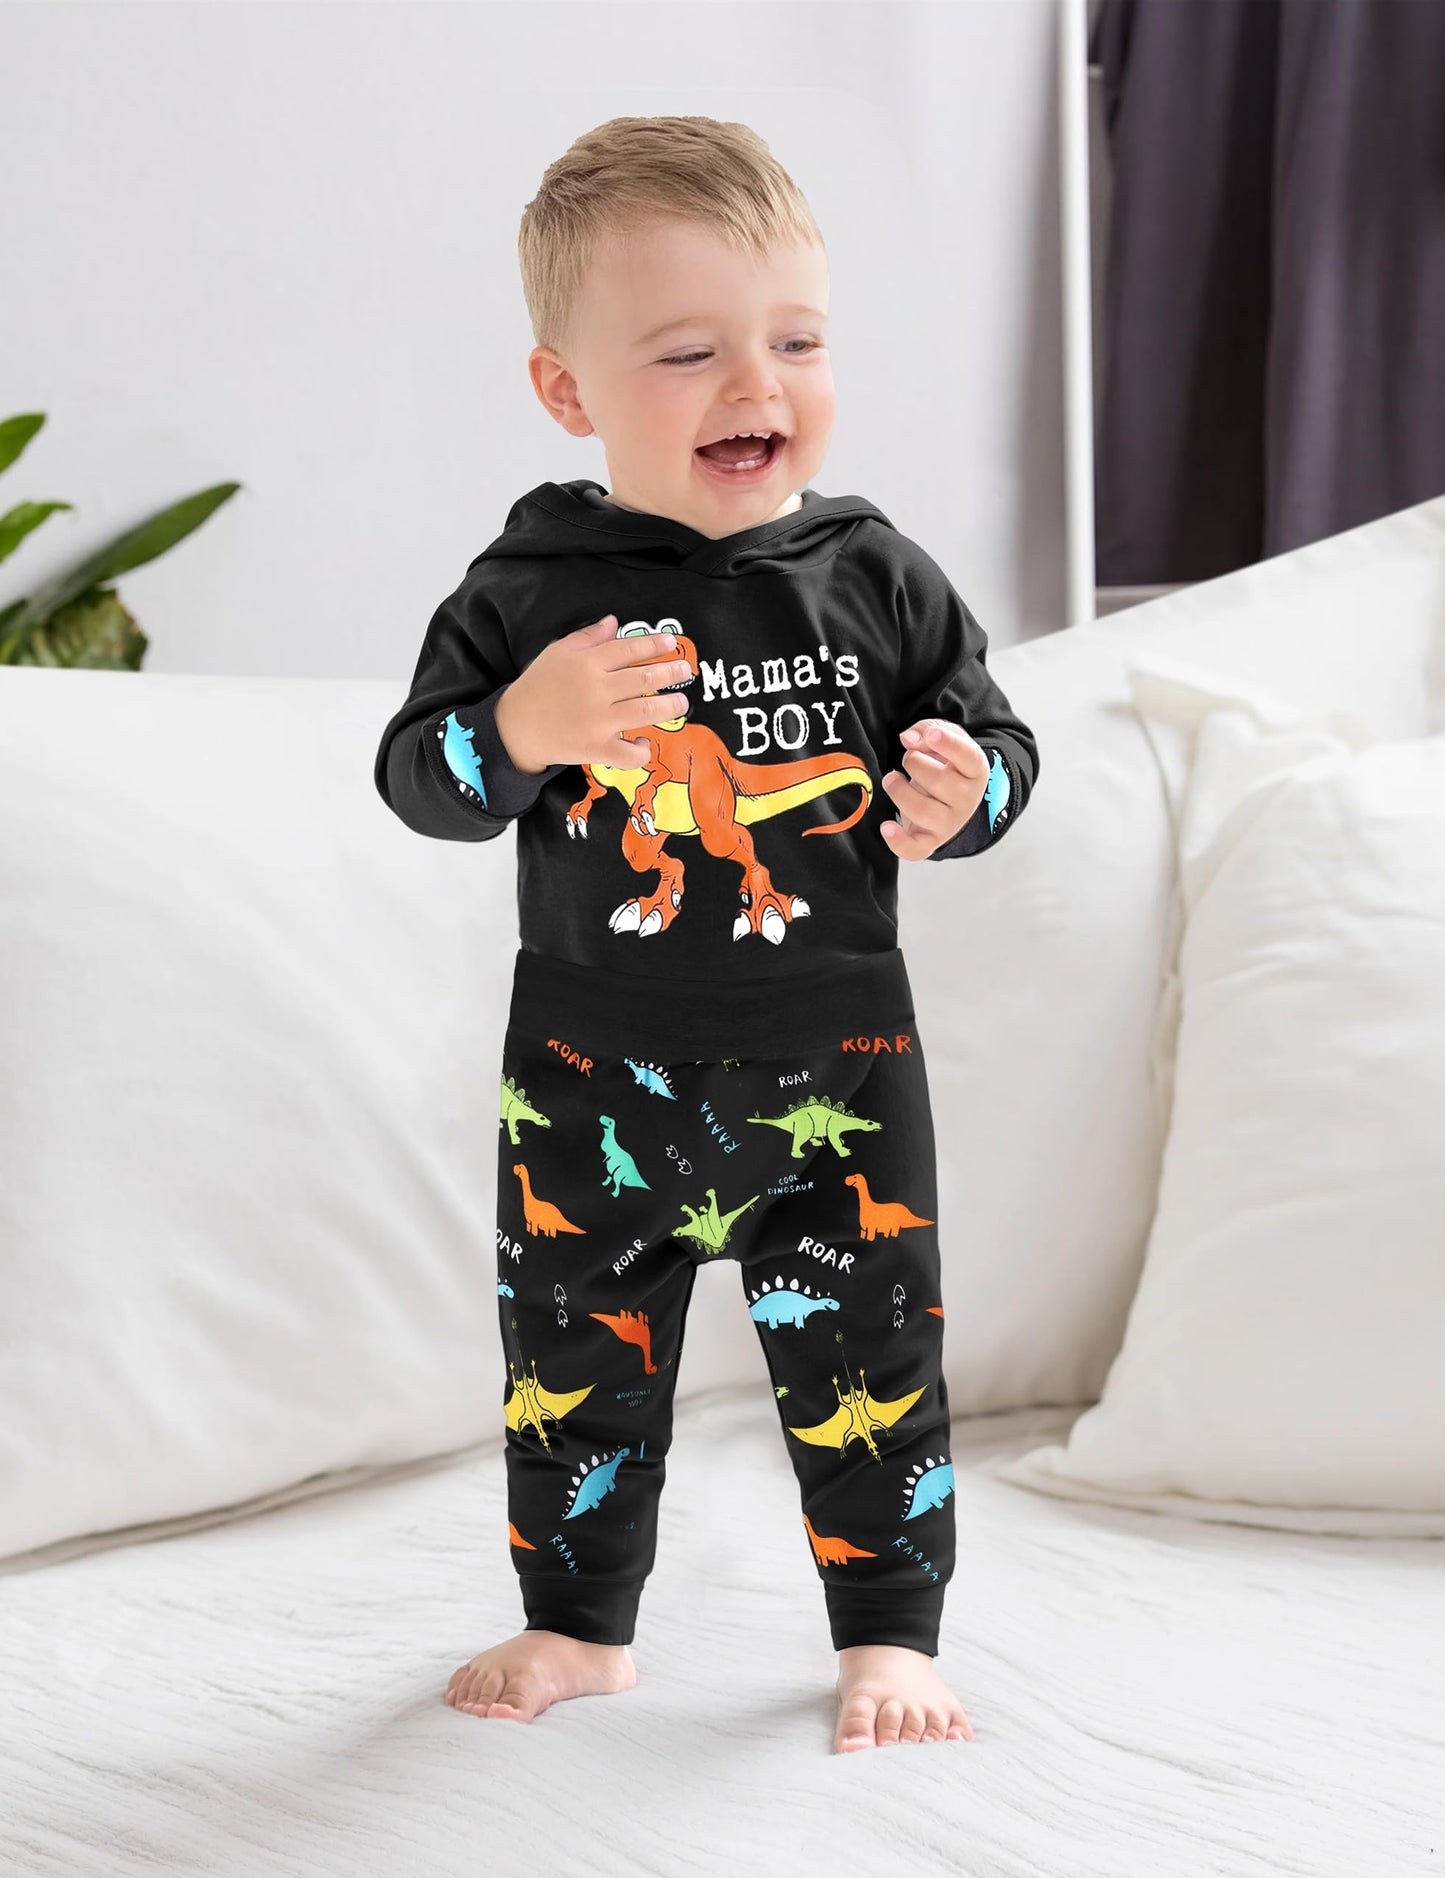 Von kilizo Newborn Baby Boy Clothes Romper Onesie Cotton Newborn Outfit for Boy Cute Infant Boy Jumpsuits Clothes 0-3M